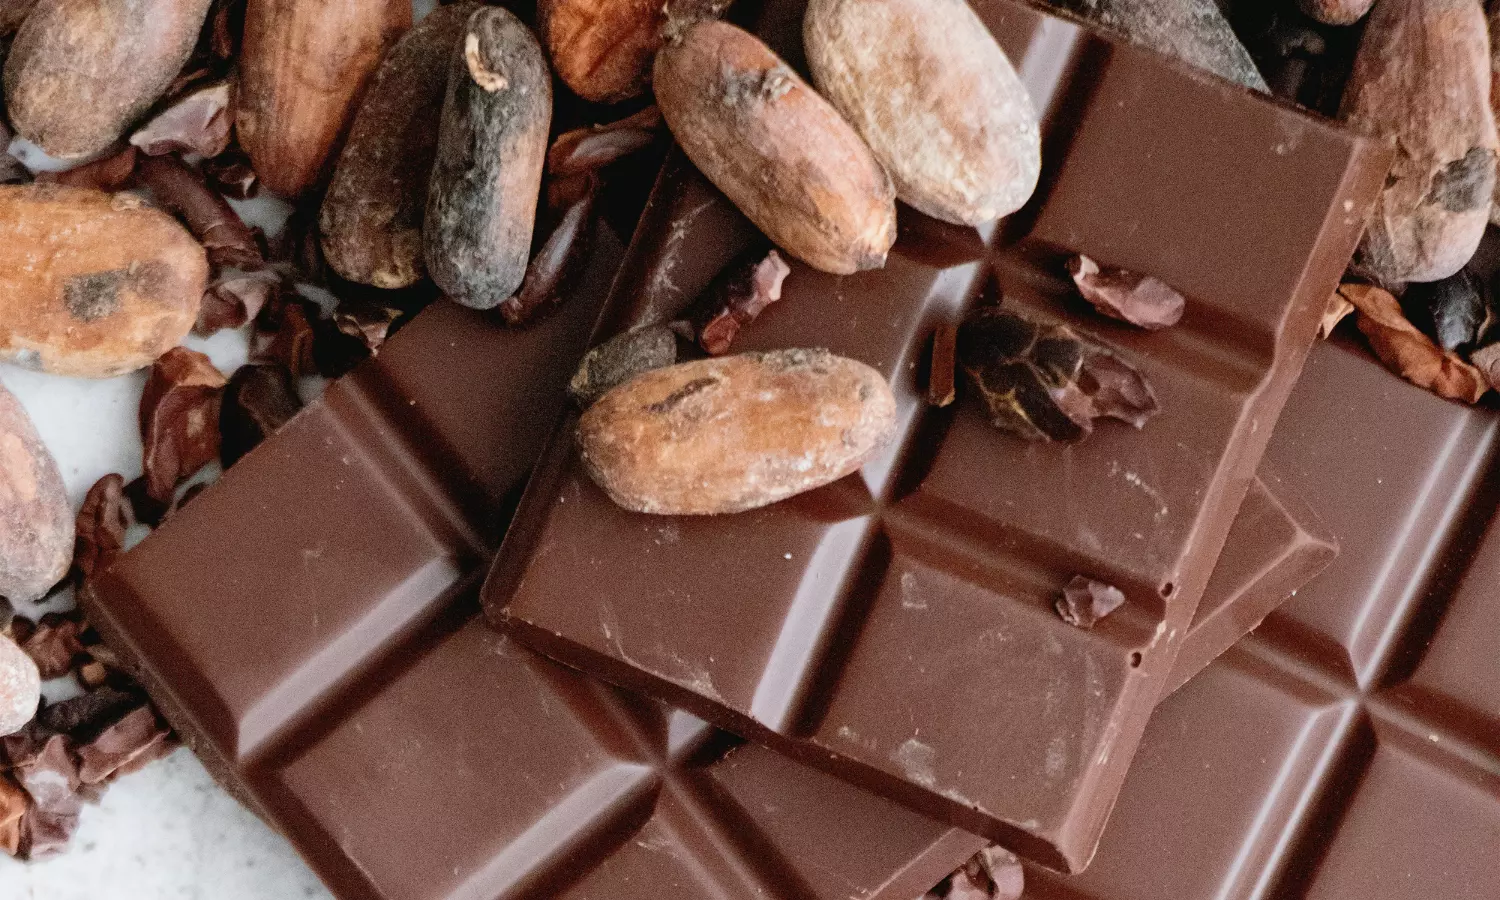 Define decadence as you discover Indias finest single-origin chocolates for World Chocolate Day